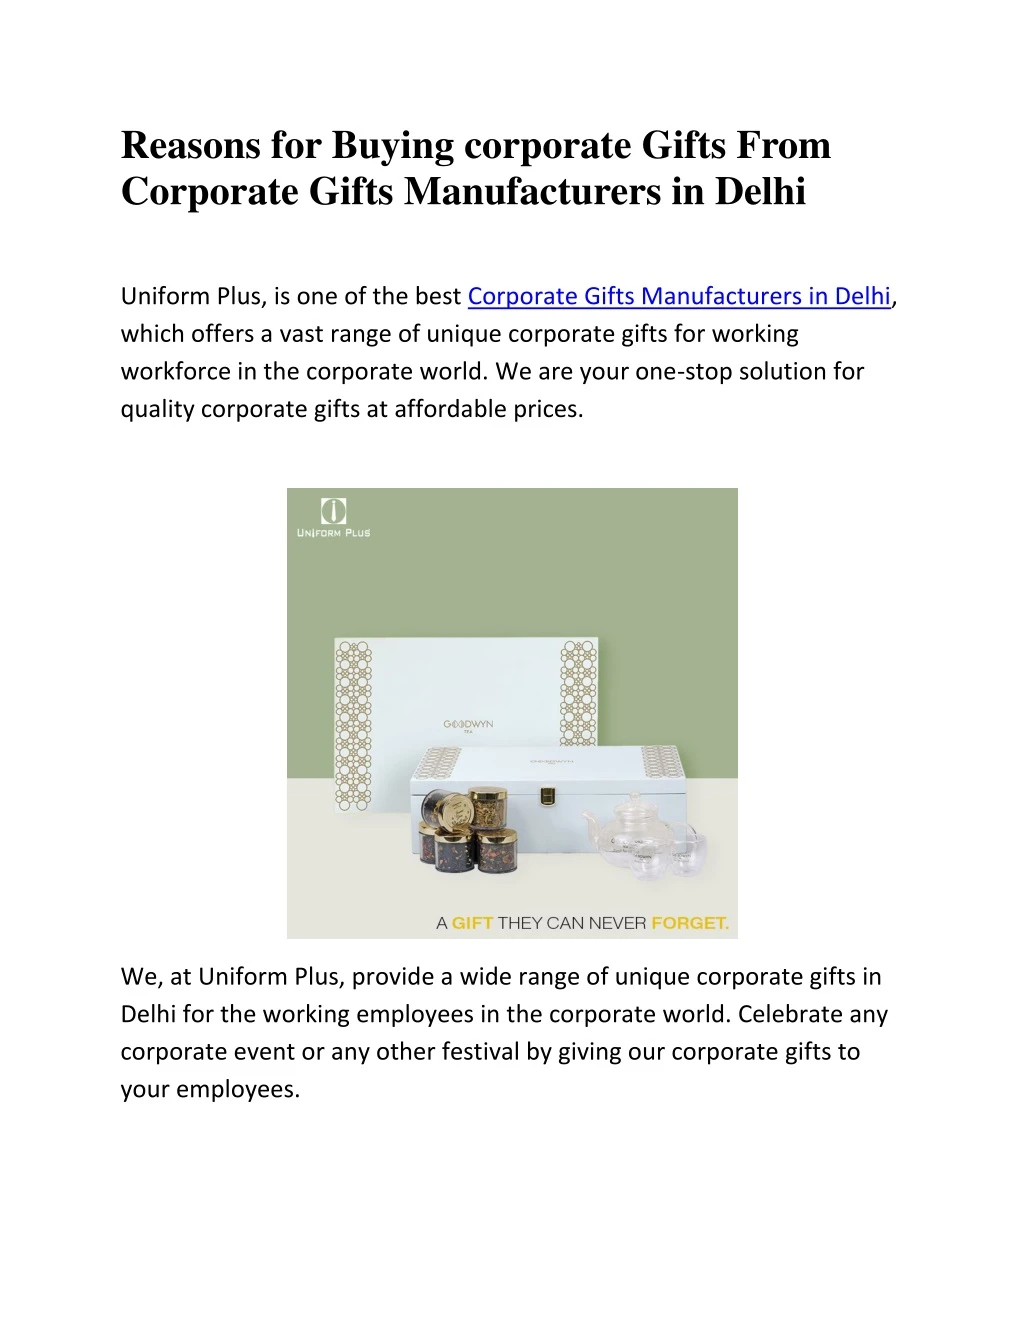 Top Diwali Gift Manufacturers in Delhi - दिवाली गिफ्ट मनुफक्चरर्स, दिल्ली -  Justdial